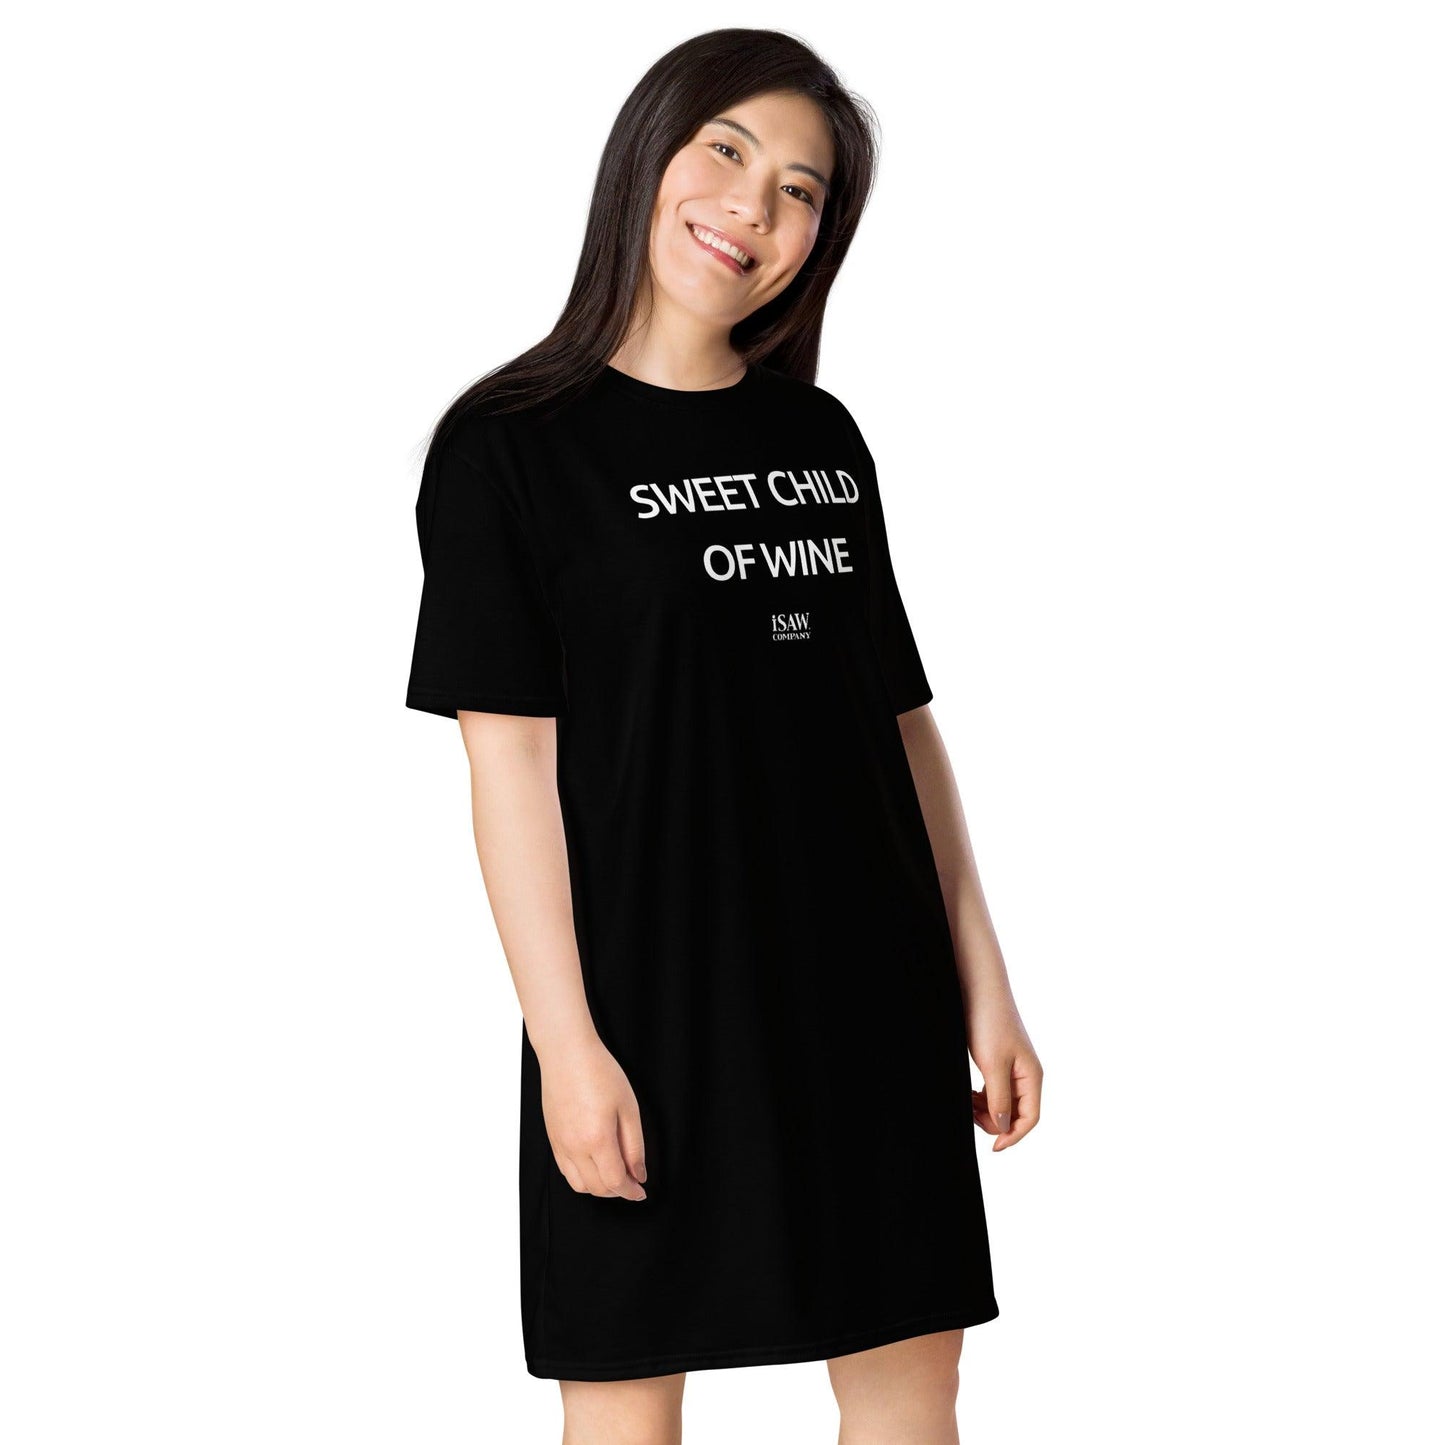 Sweet Child Of Wine - Womens Black T-Shirt Dress - iSAW Company